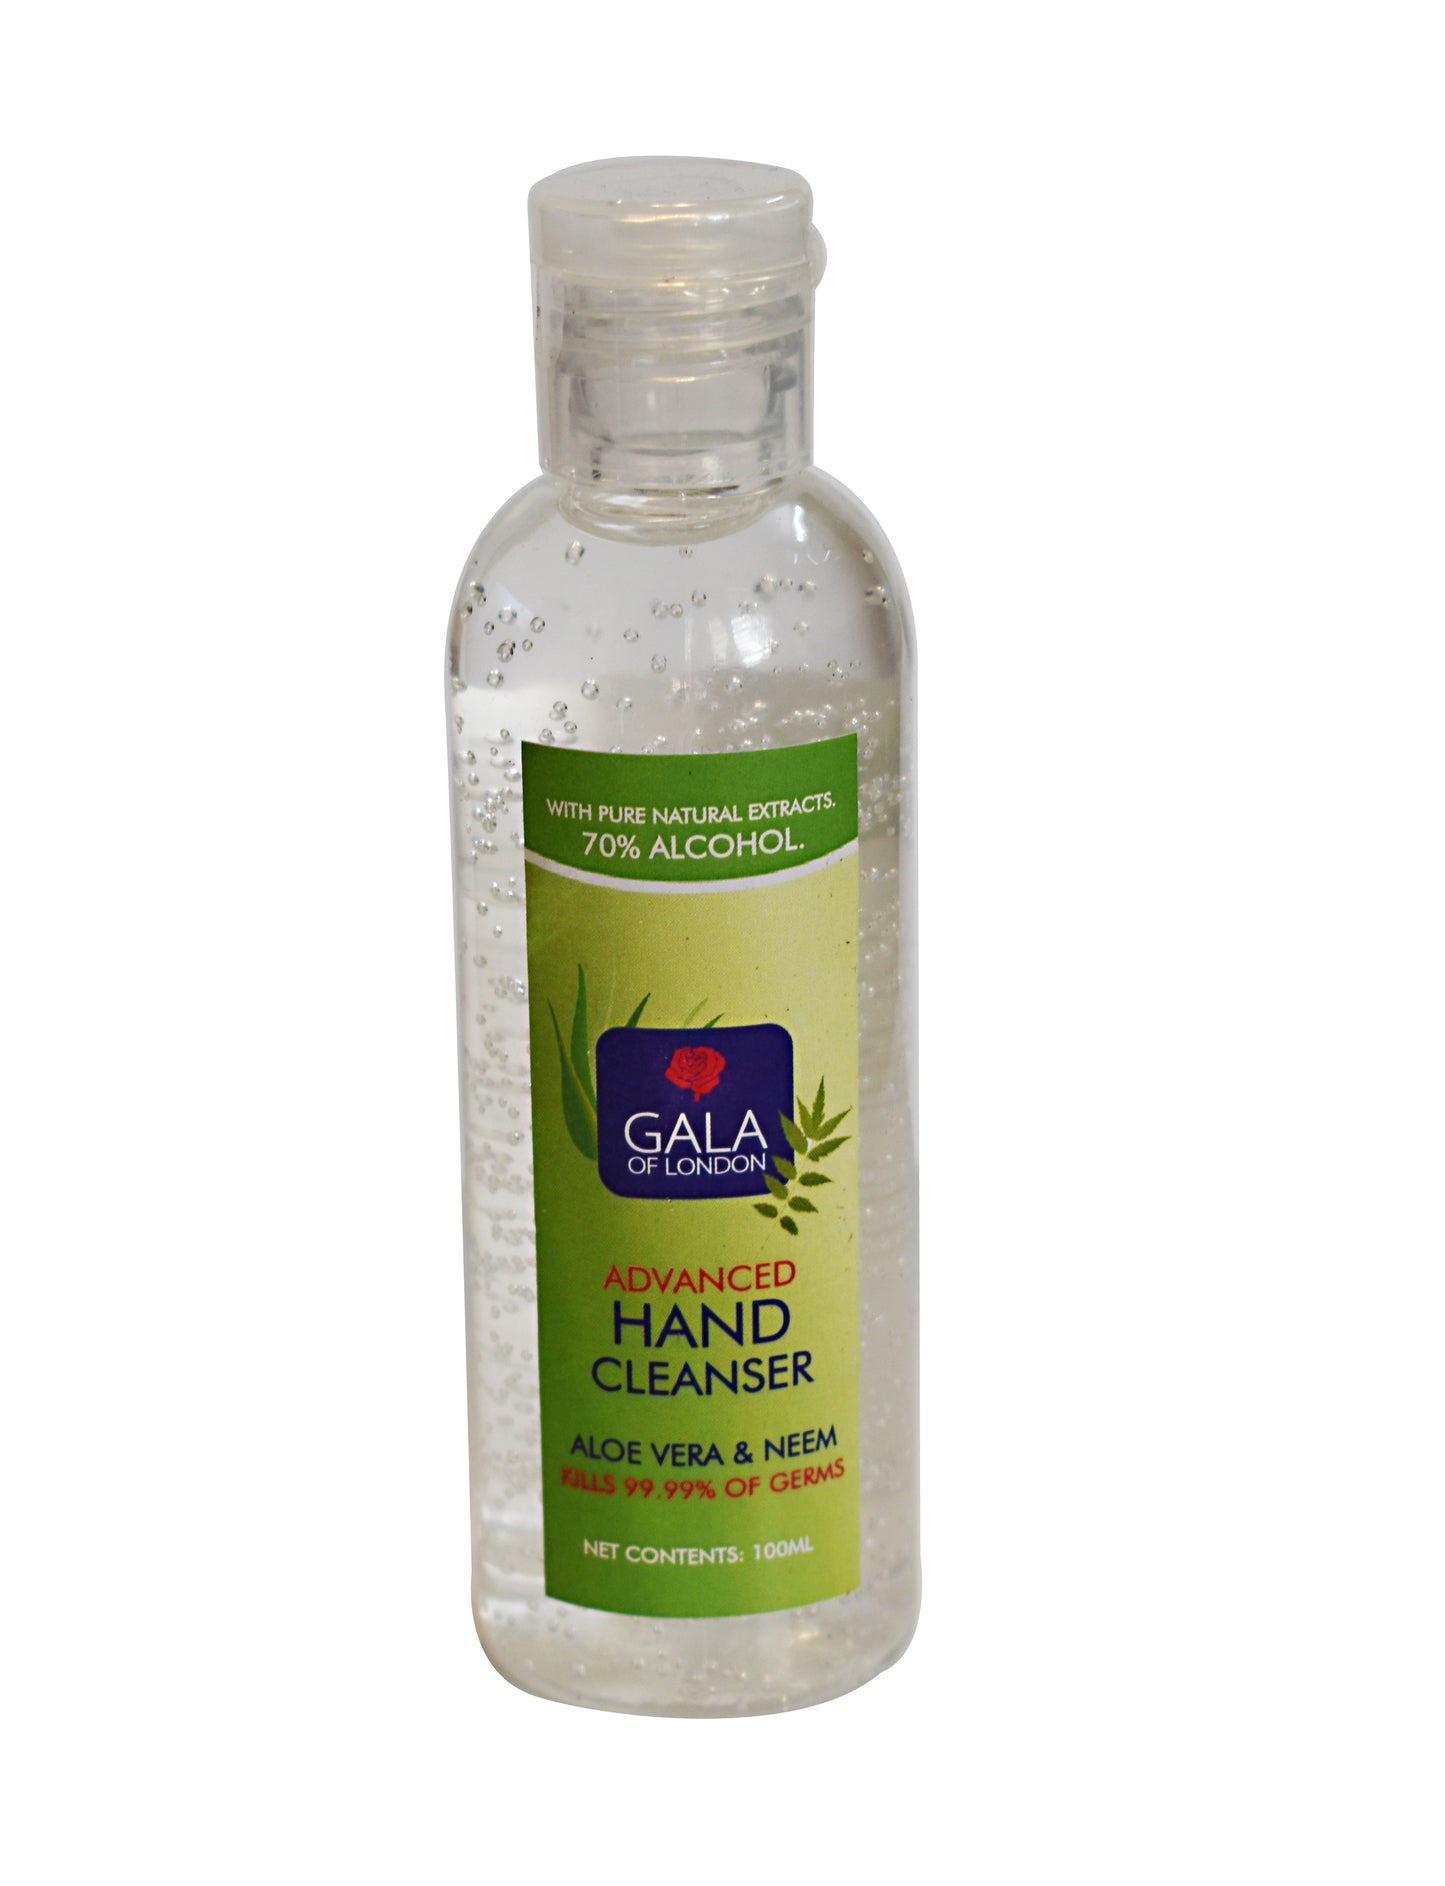 Gala of London Advanced Hand Cleanser - Aloe Vera & Neem 100ml